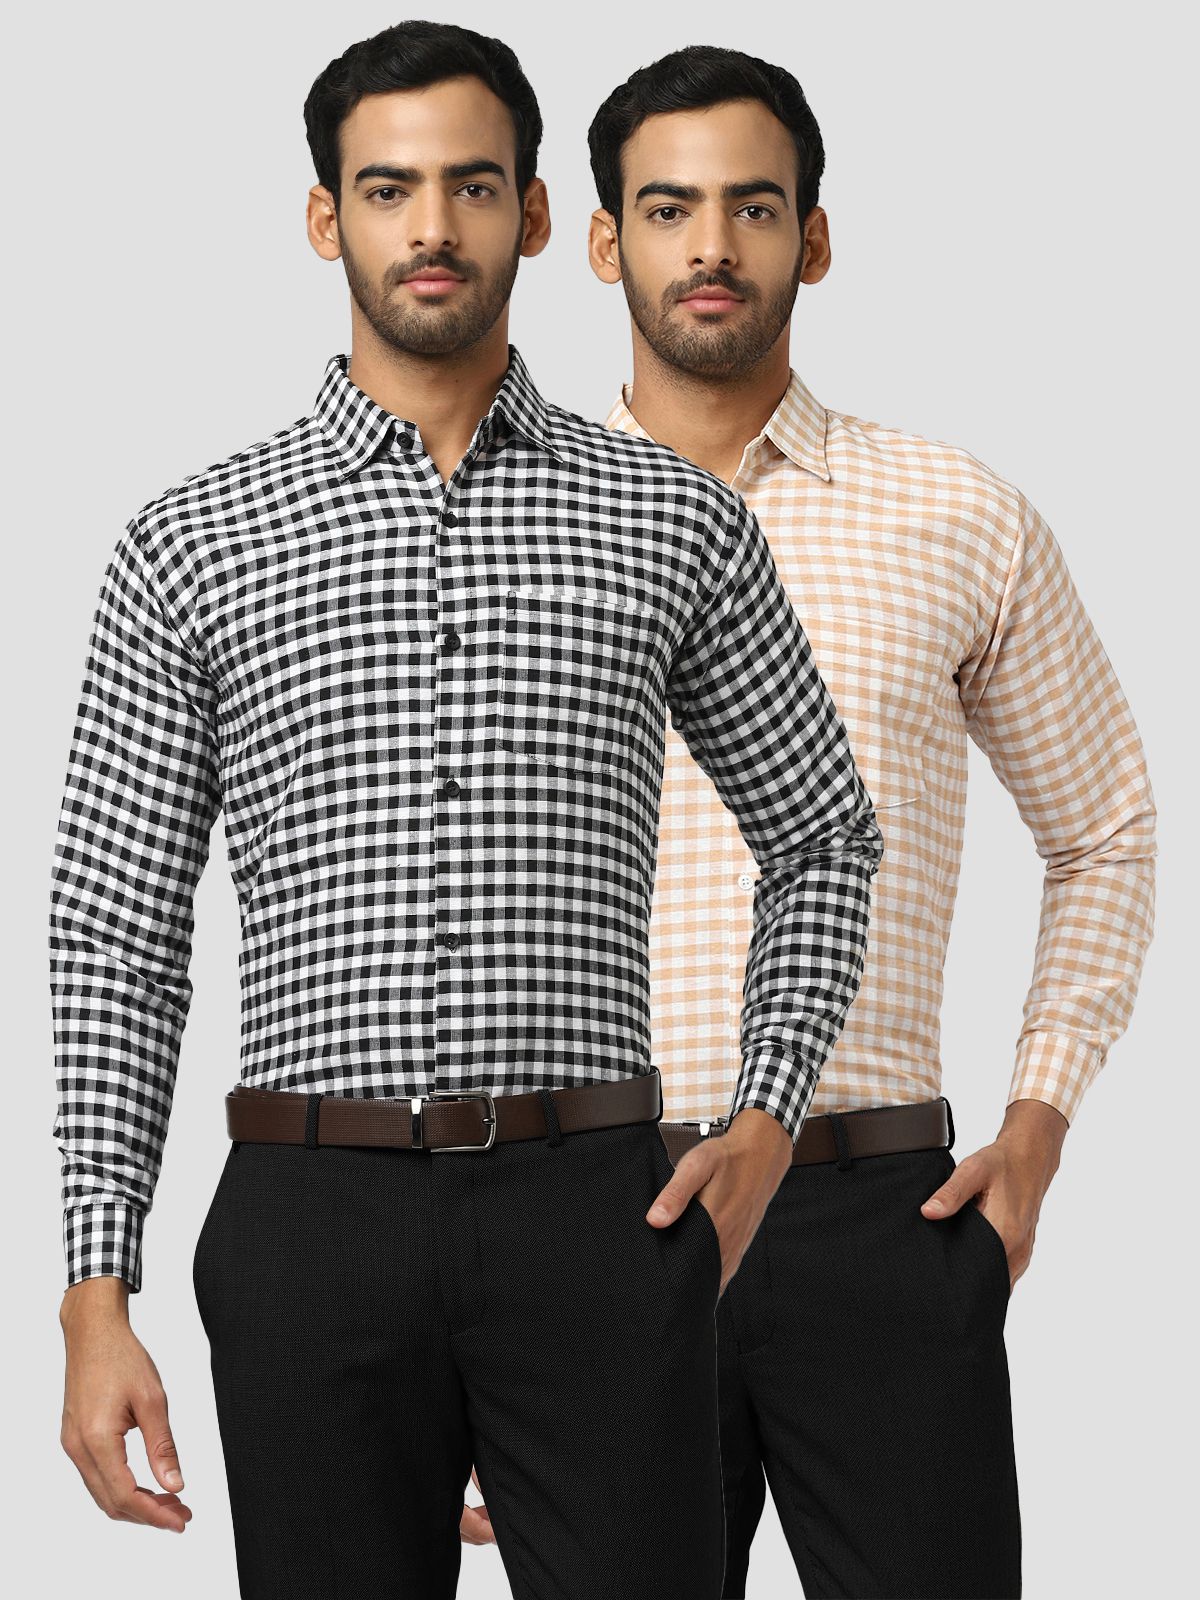     			DESHBANDHU DBK - Multicolor Cotton Regular Fit Men's Casual Shirt (Pack of 2 )